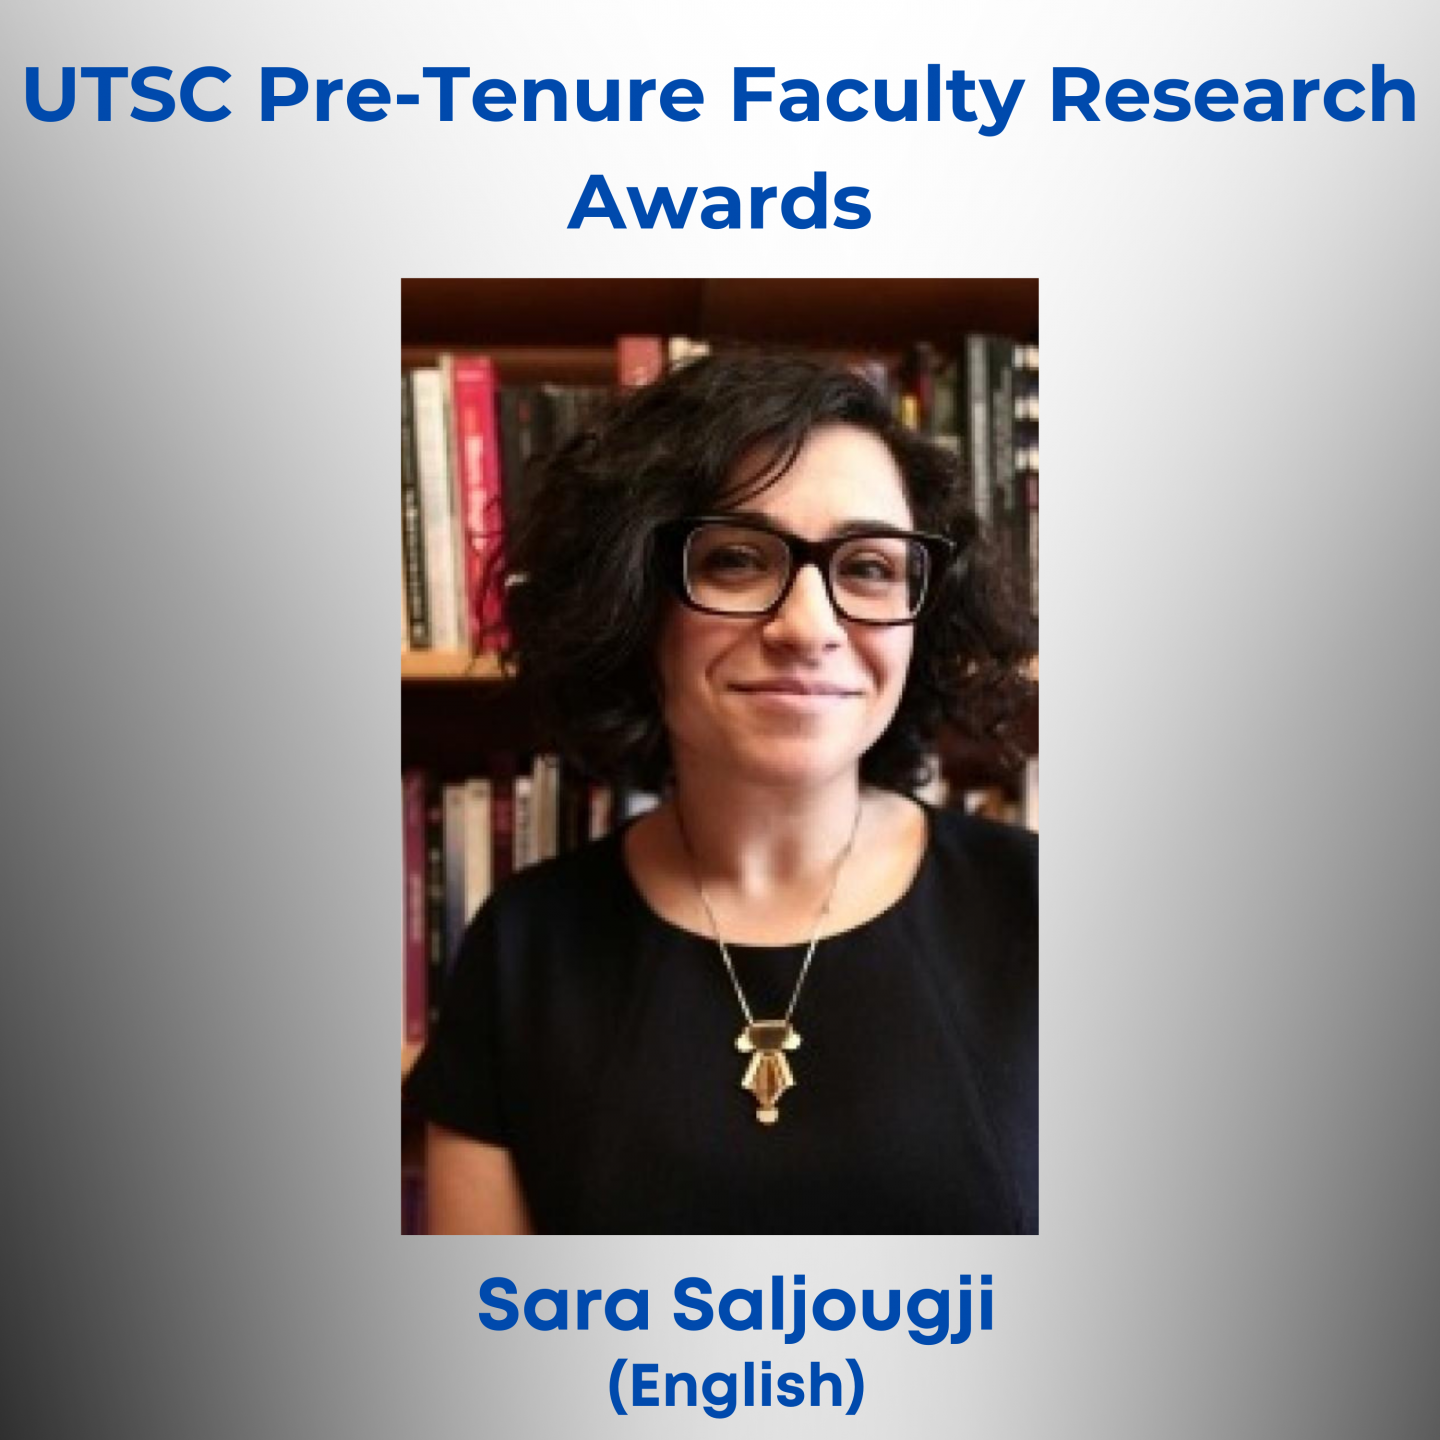 Professor Sara Saljougji